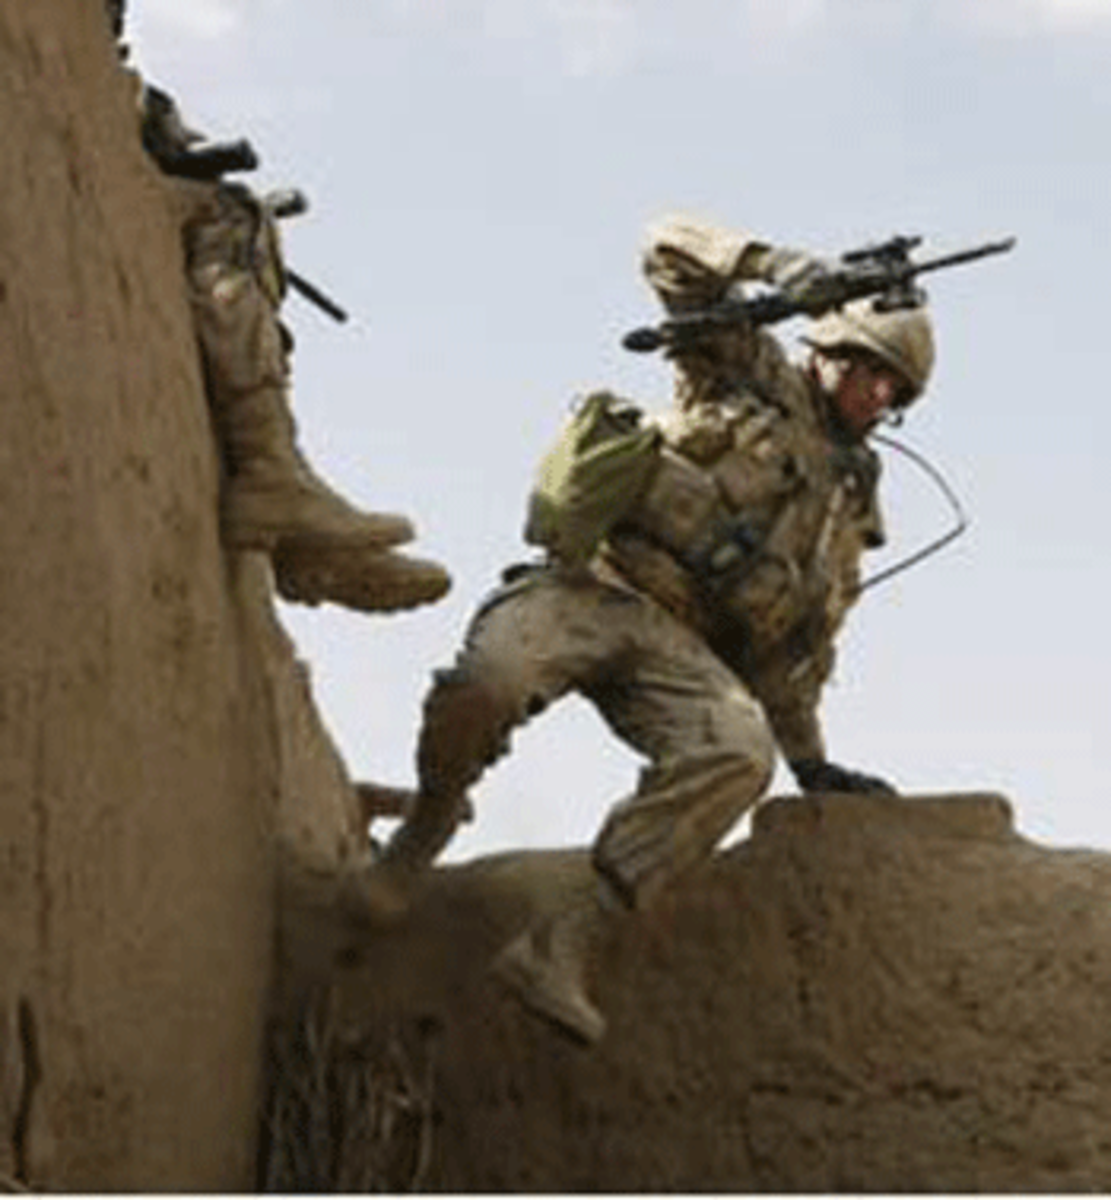 War At Afghanistan